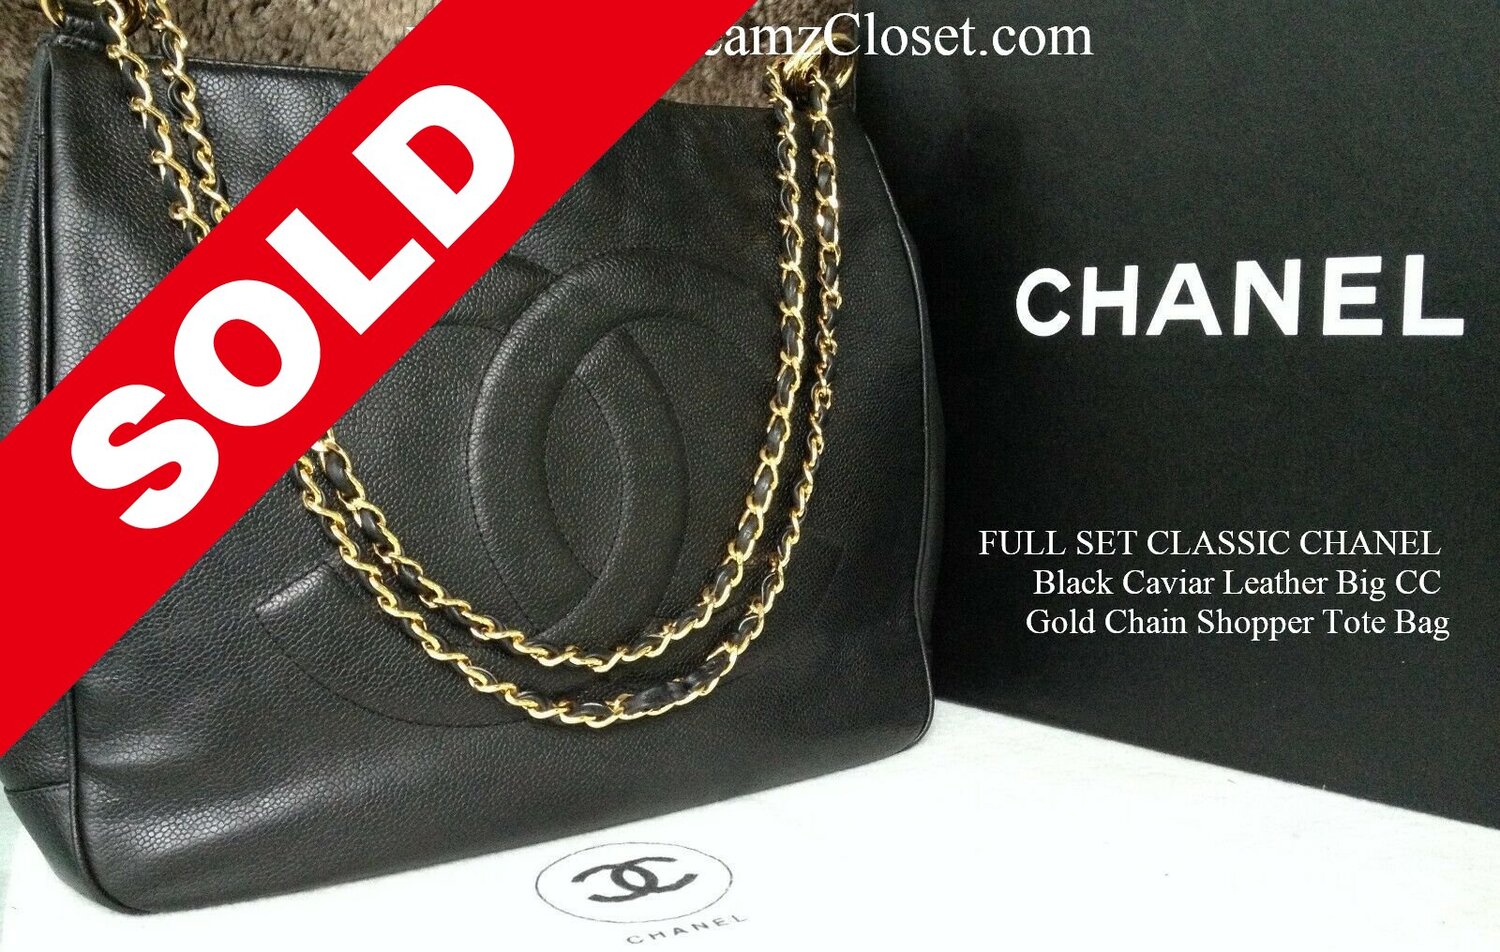 SOLD - FULL SET CLASSIC CHANEL Black Caviar Leather Big CC